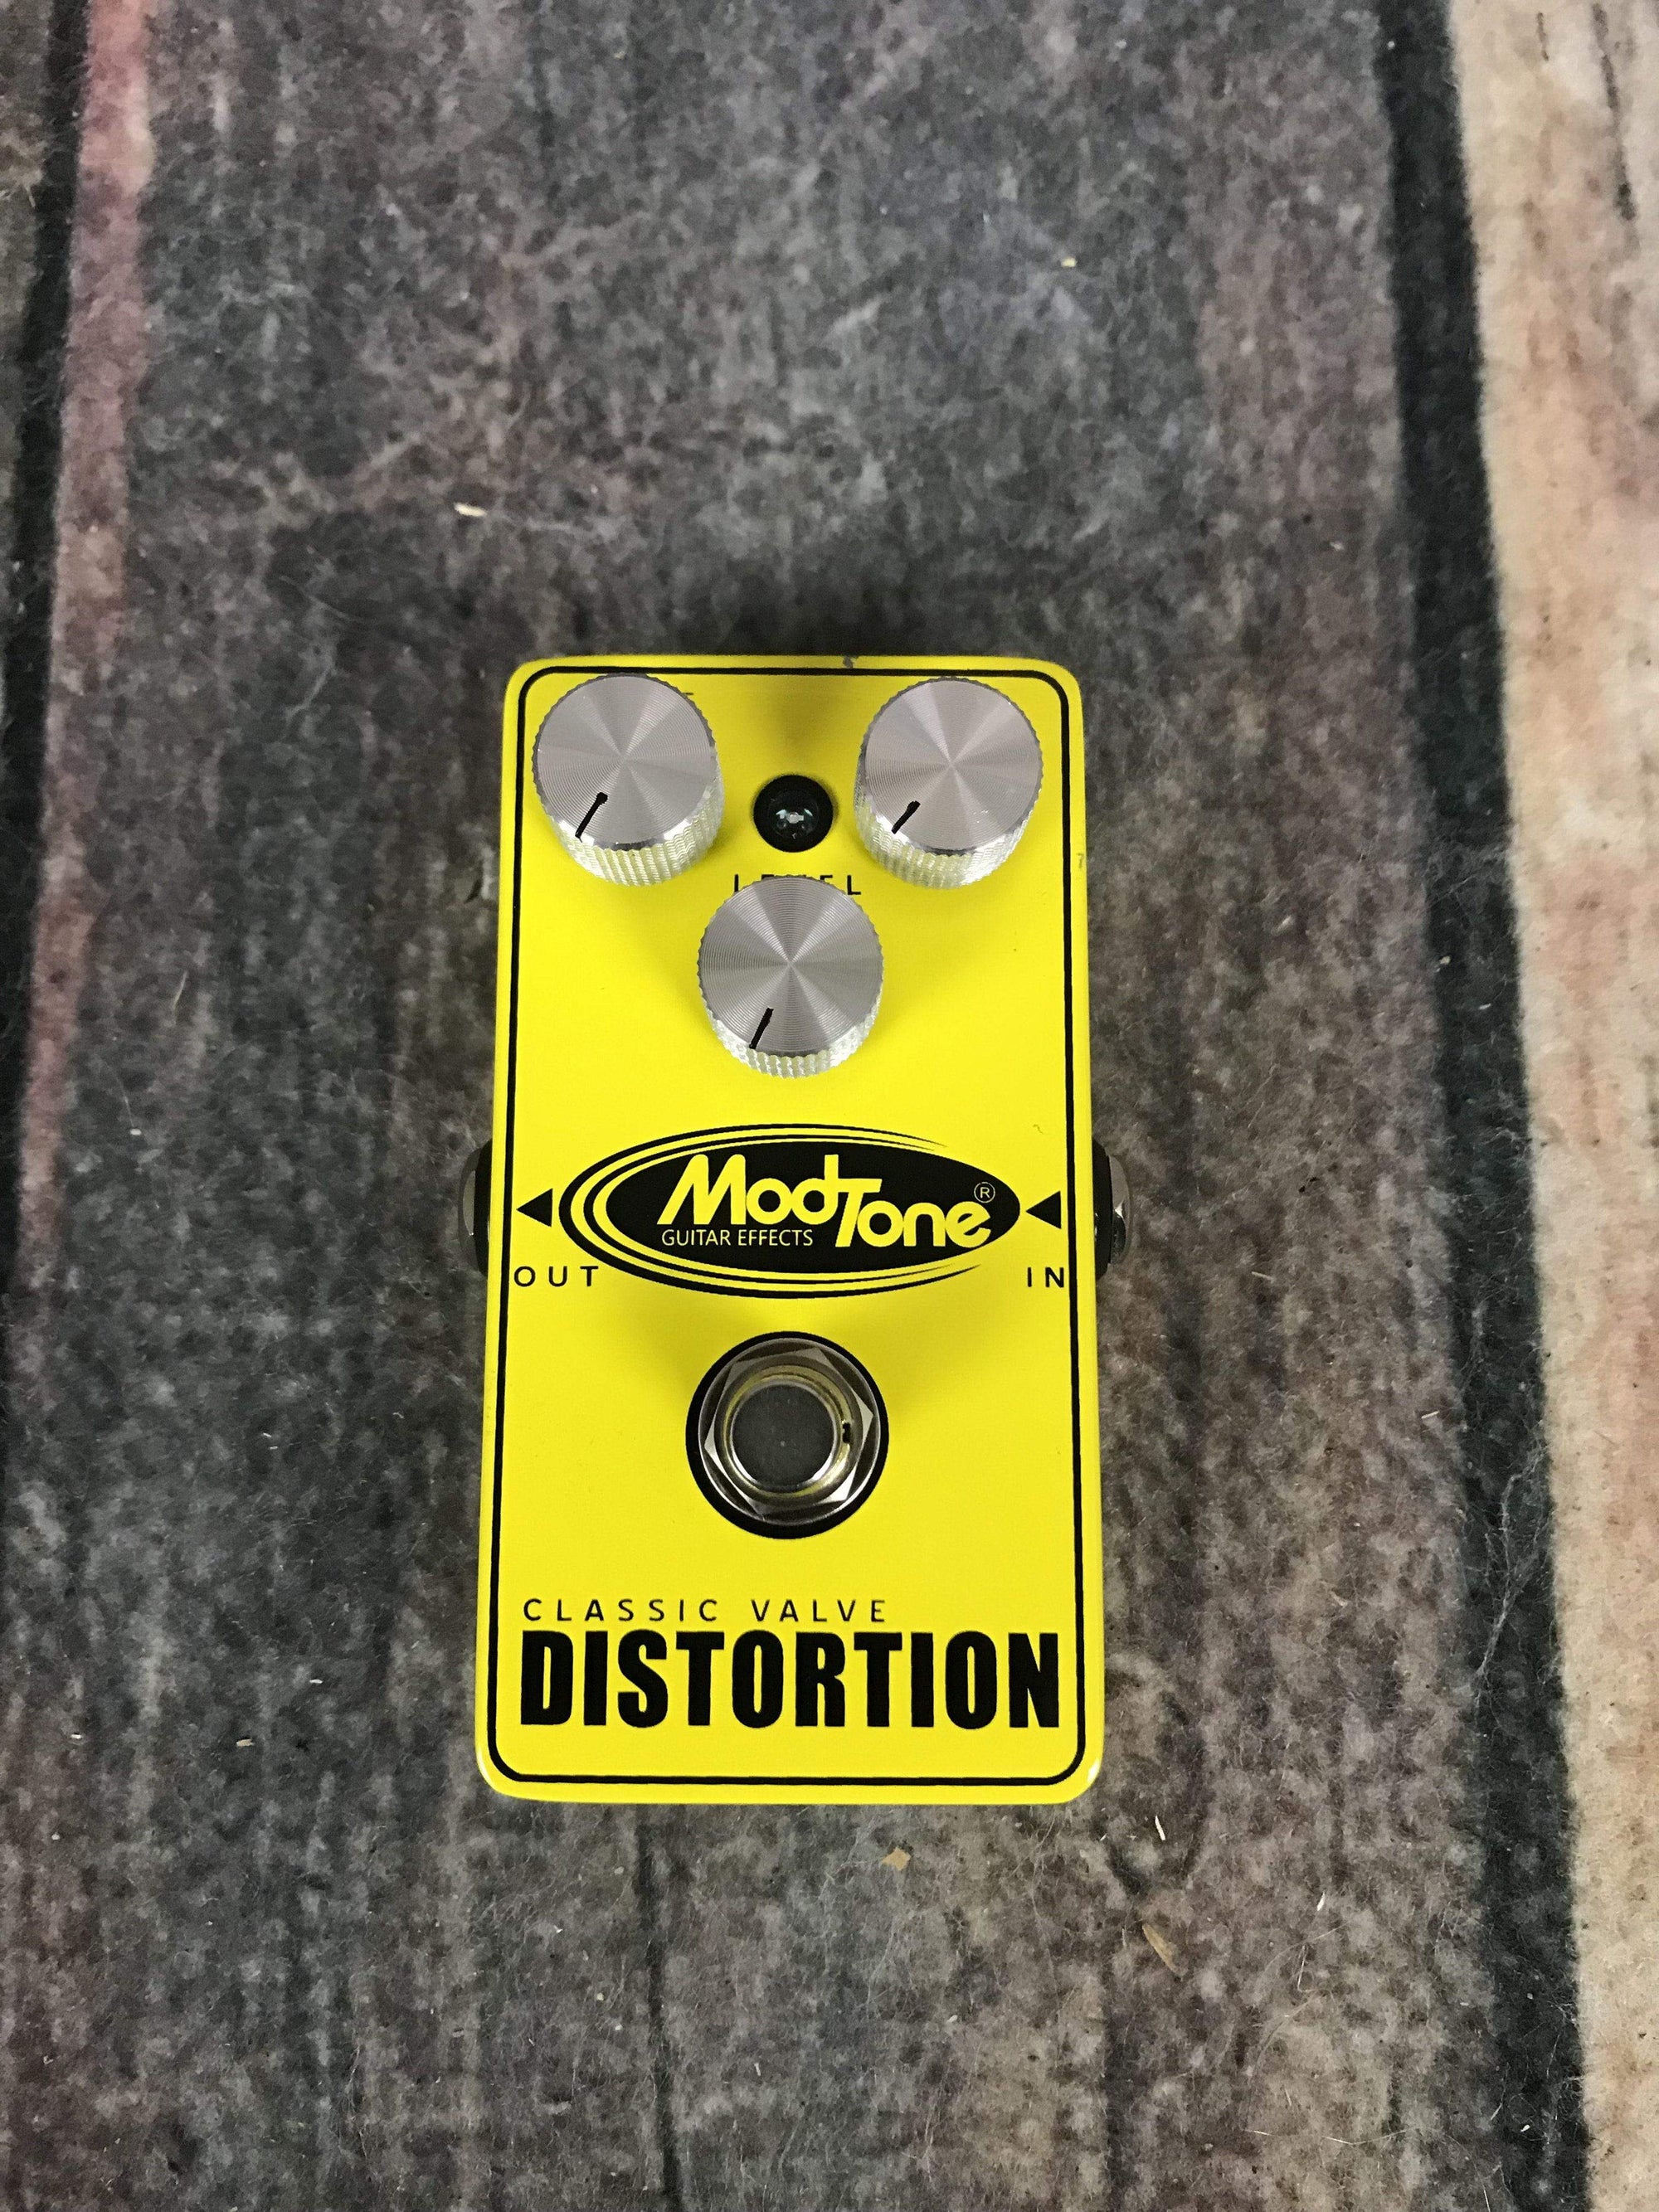 Modtone pedal ModTone MT-CD Classic Valve Distortion Pedal